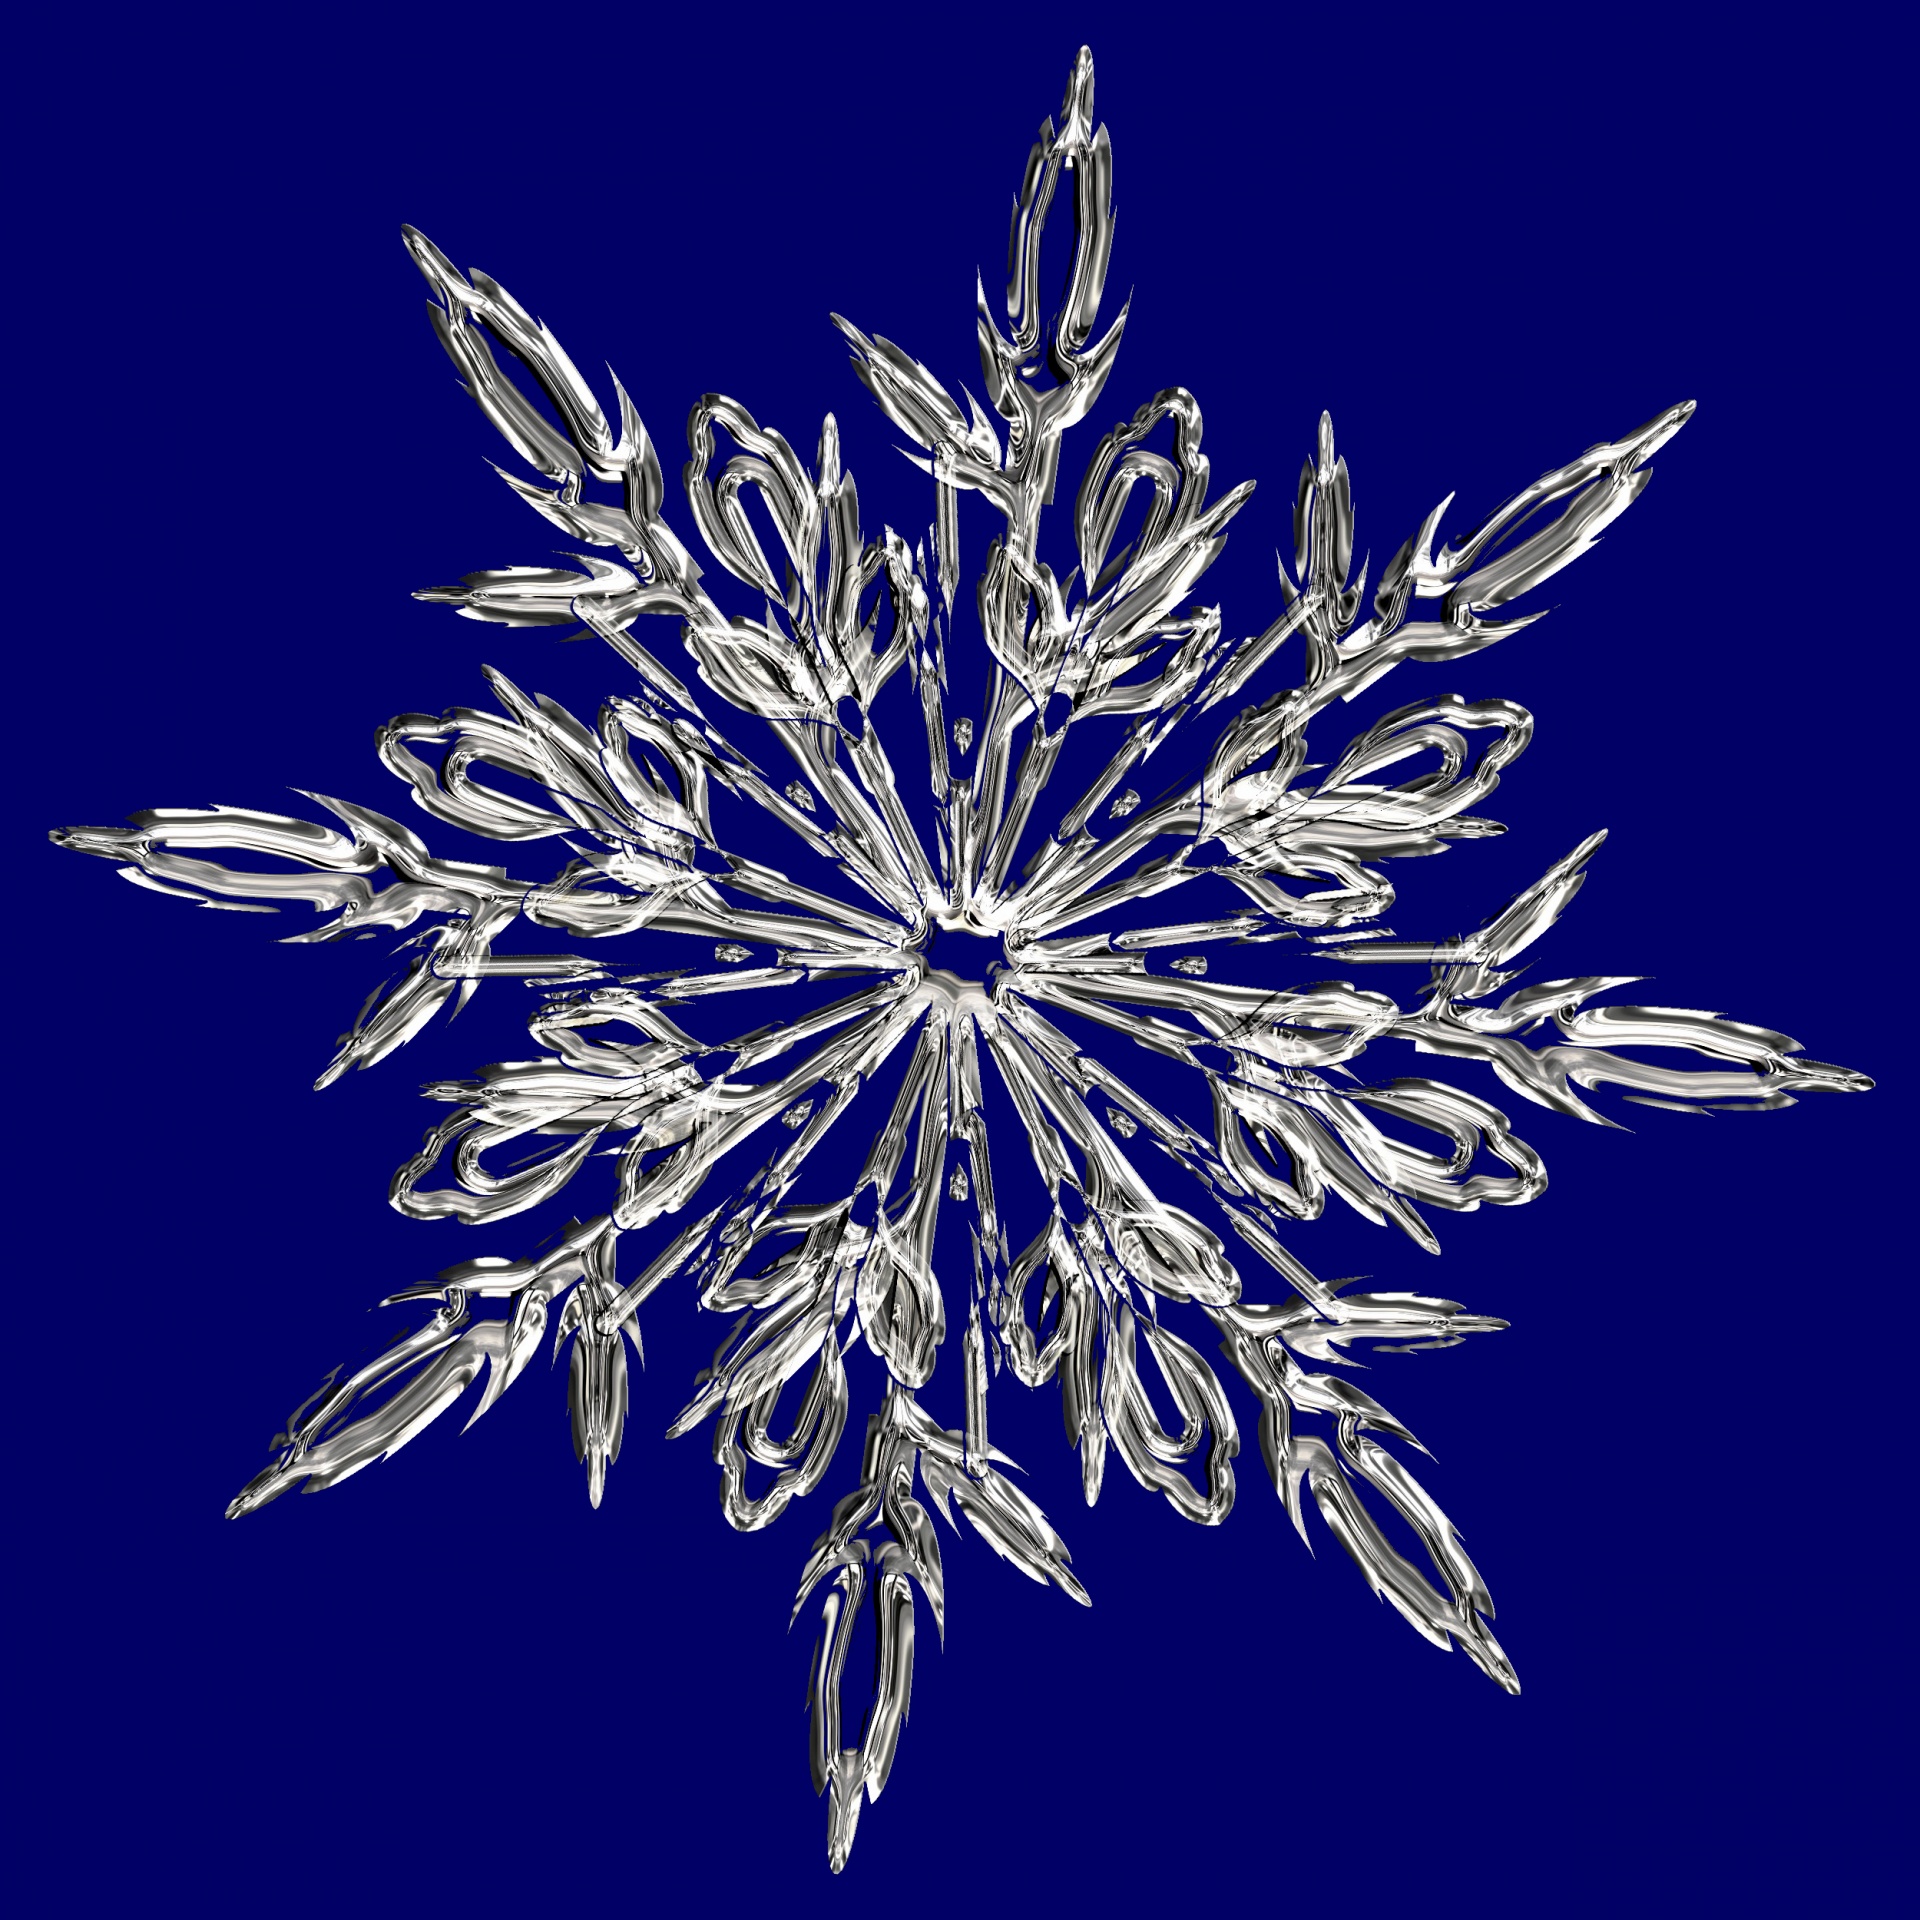 Floco de neve de cristal azul